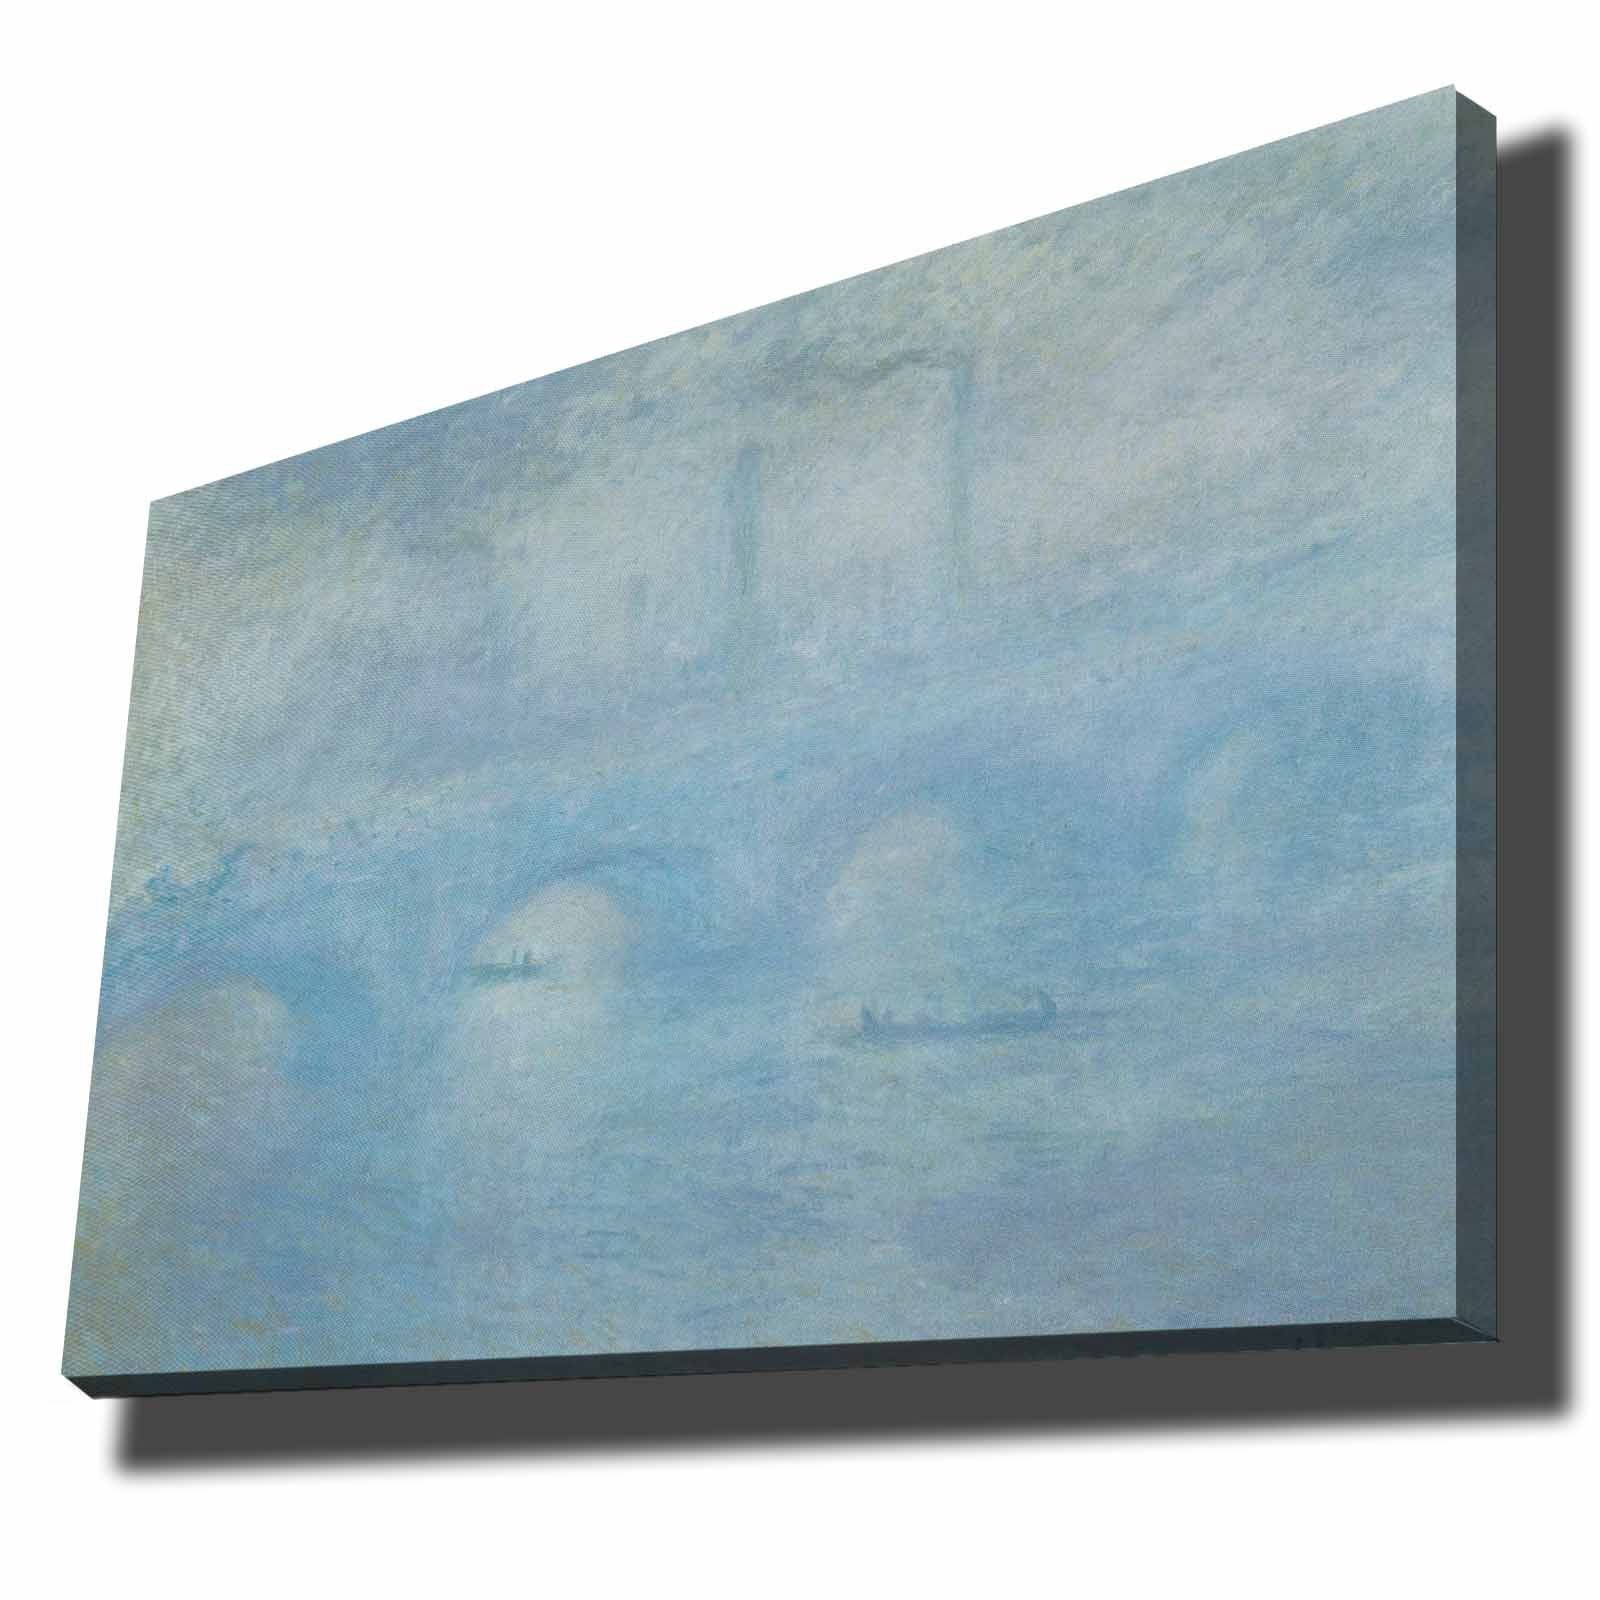 Wallity Leinwandbild 100 x 70 cm, Leinwand Bunt, CLD1145, 100%